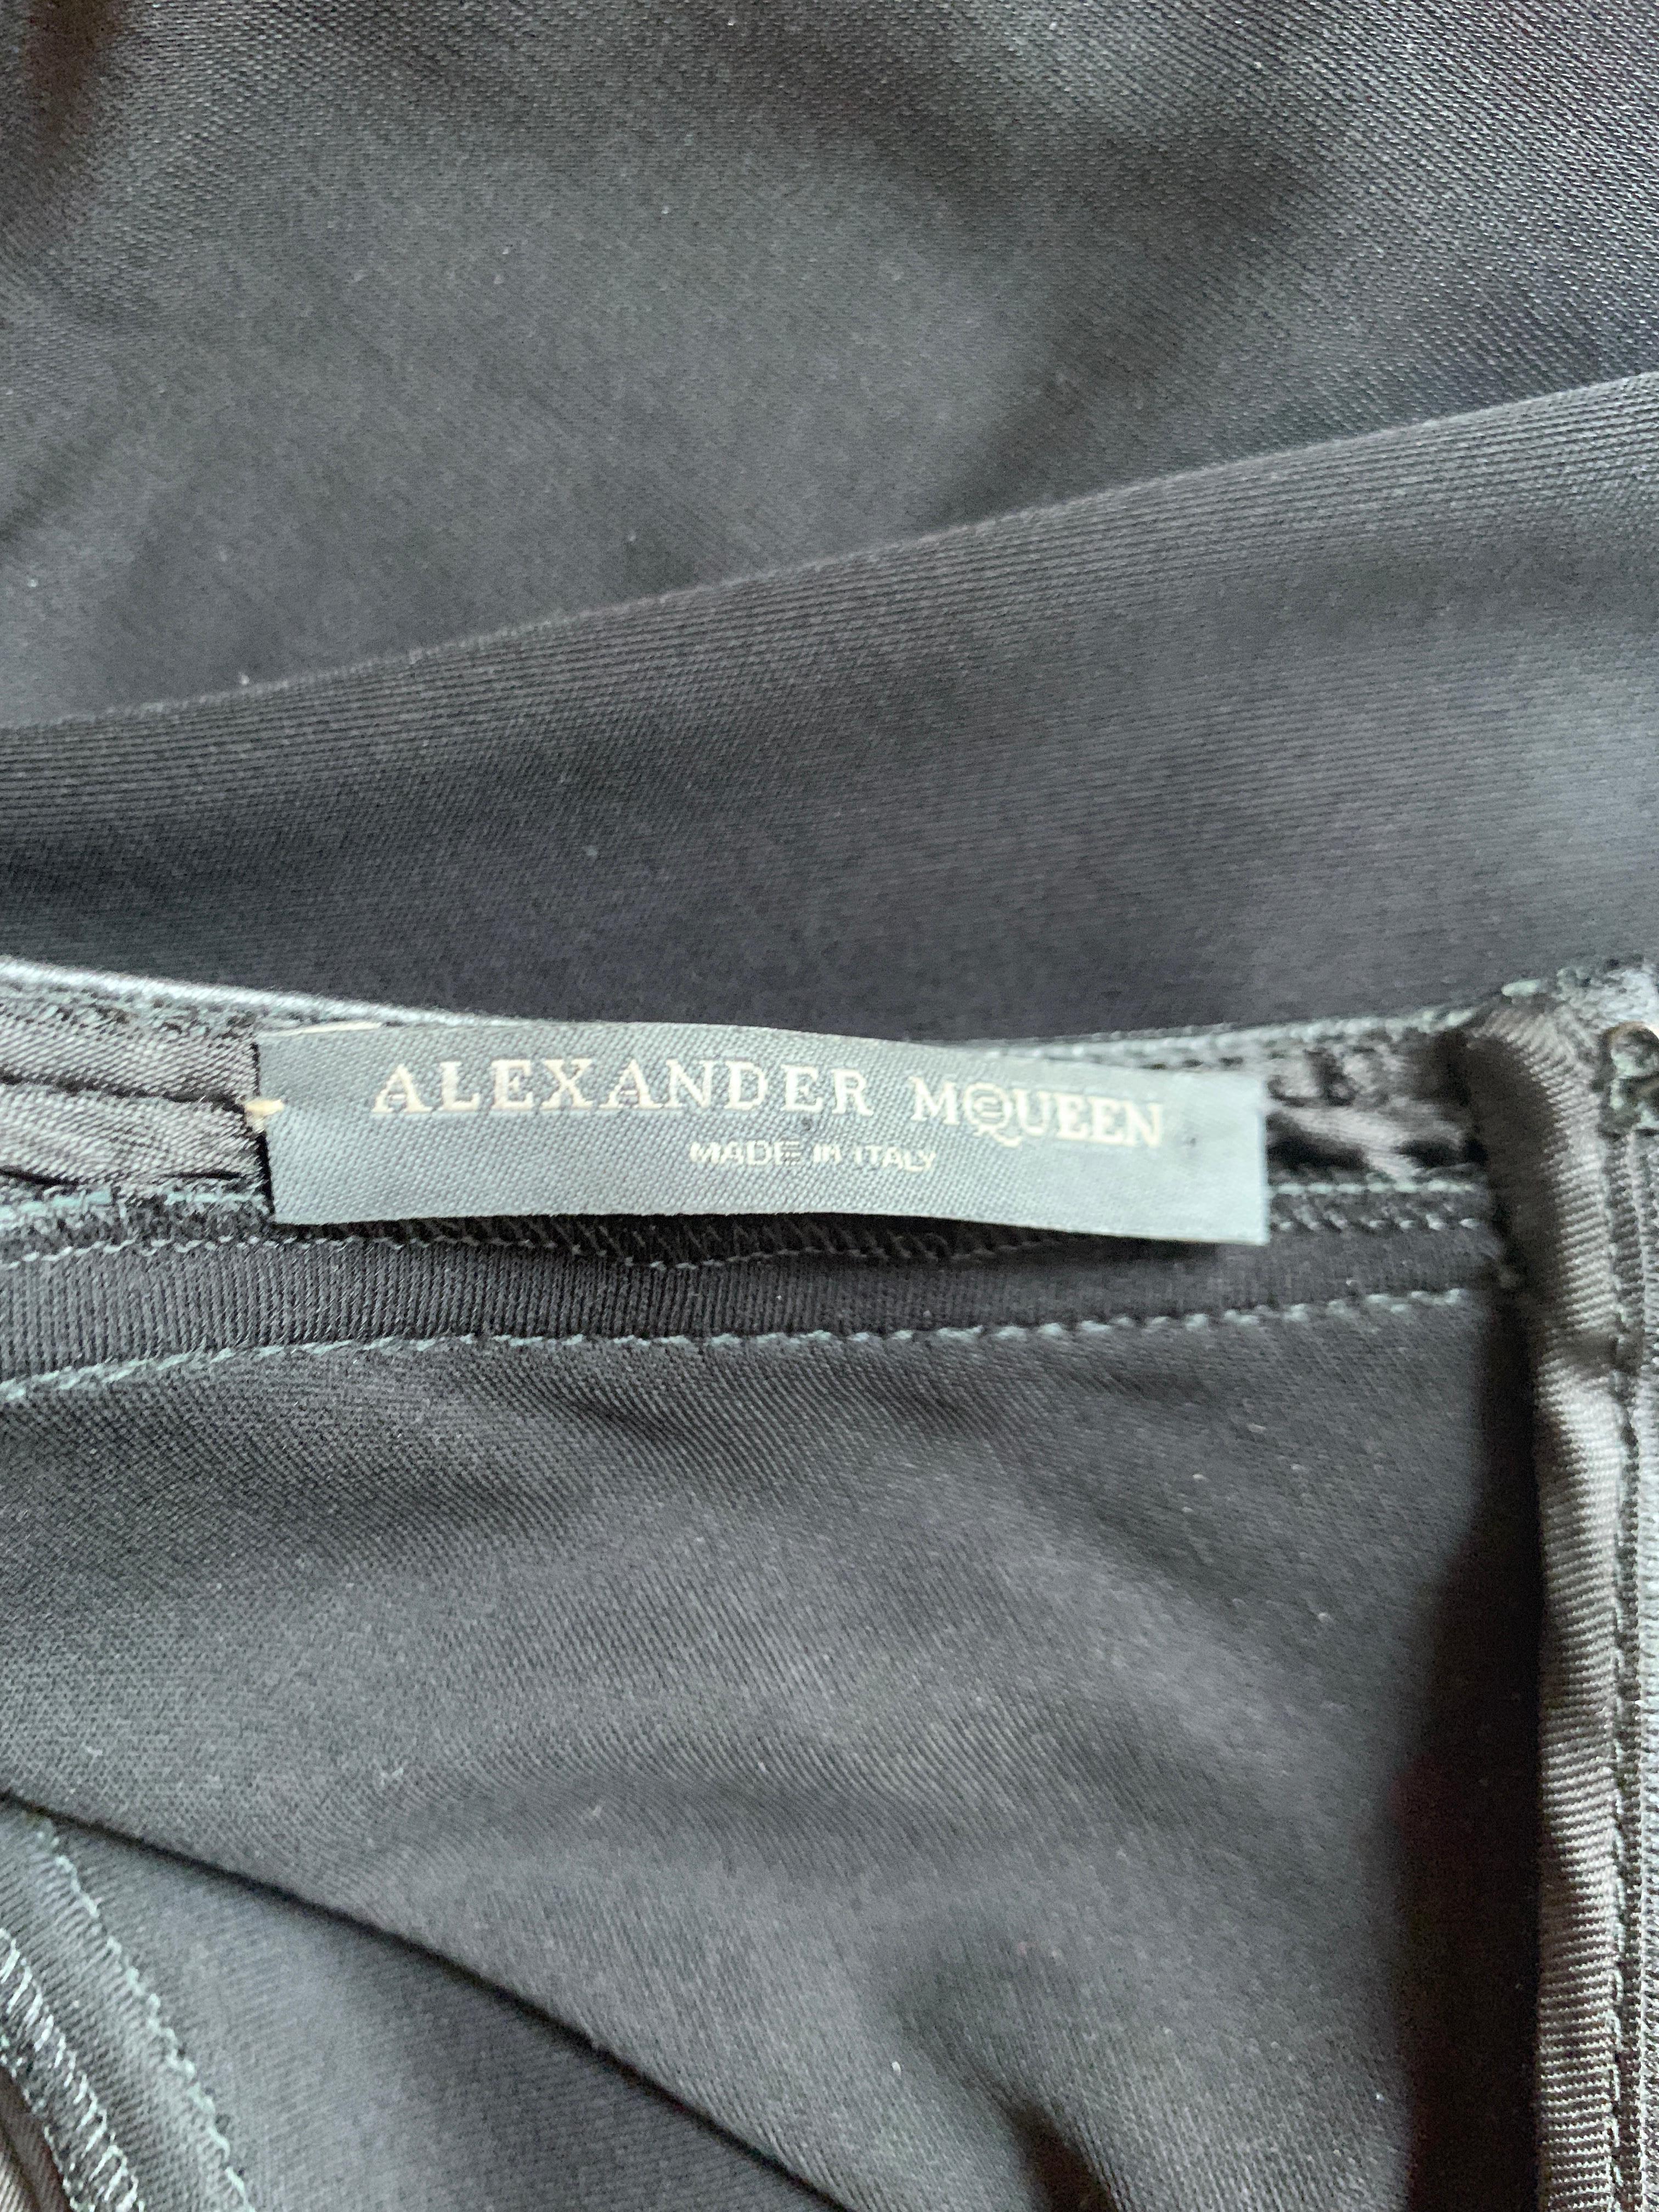 Alexander McQueen Leather Detail Black Jersey Tank Top, 2003   1